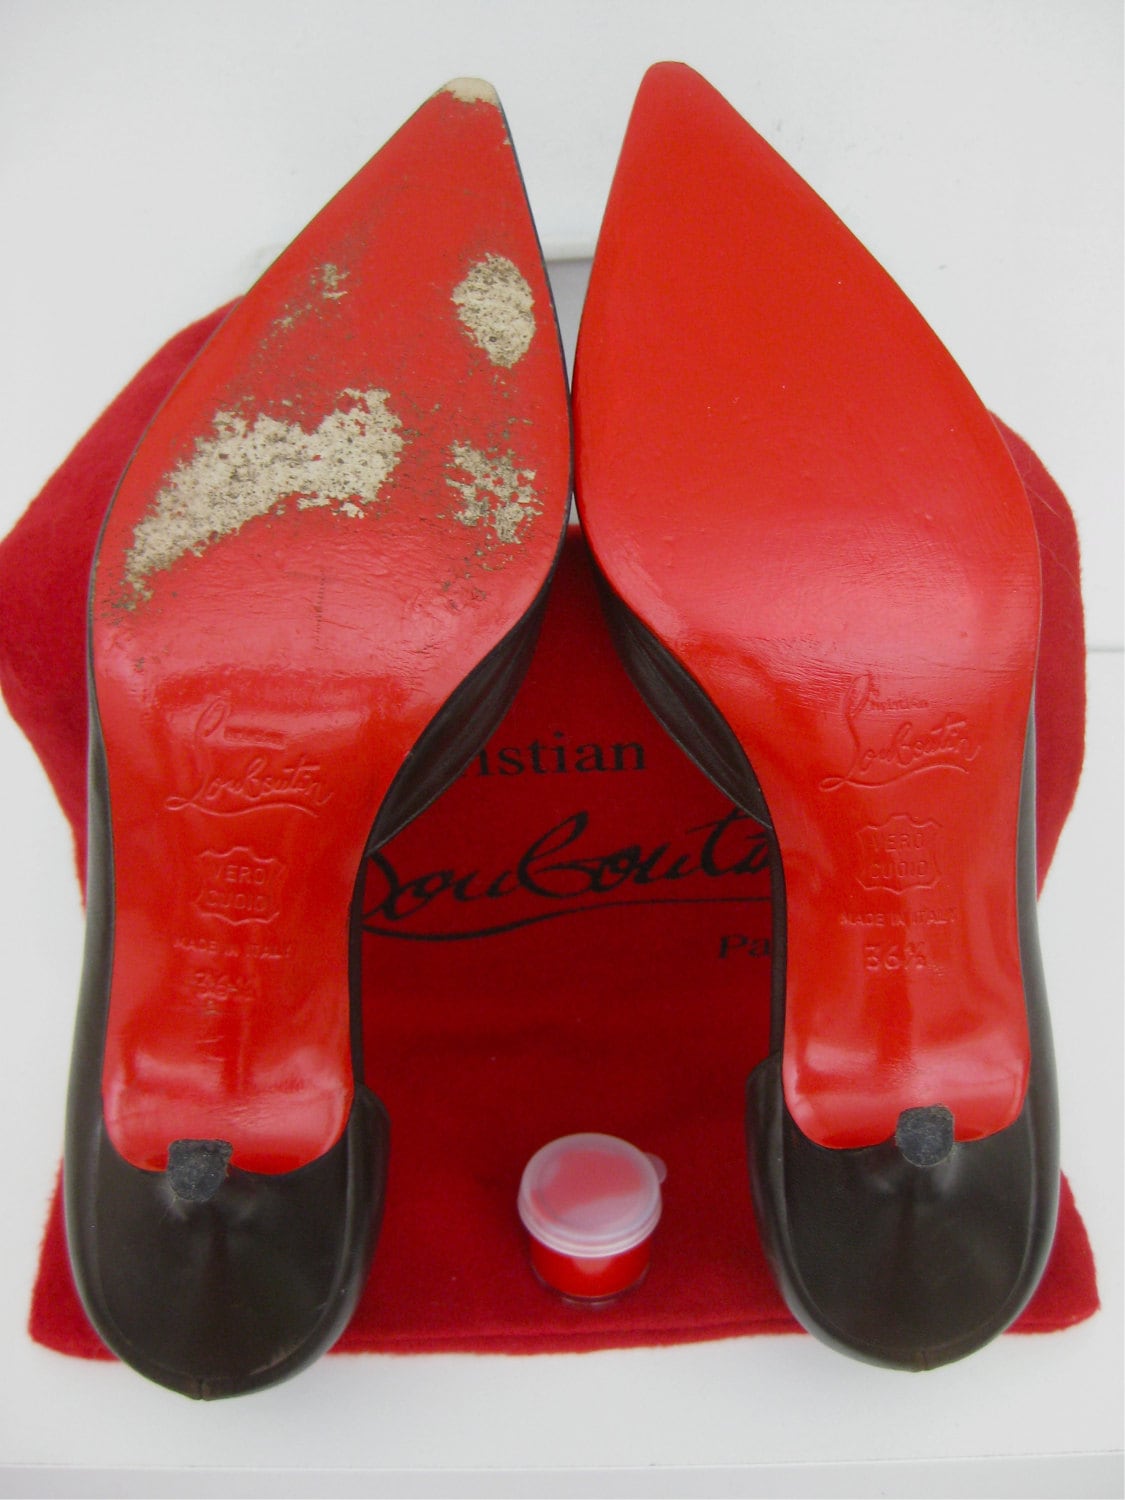 Designer Louboutin wins case on red soled high-heels